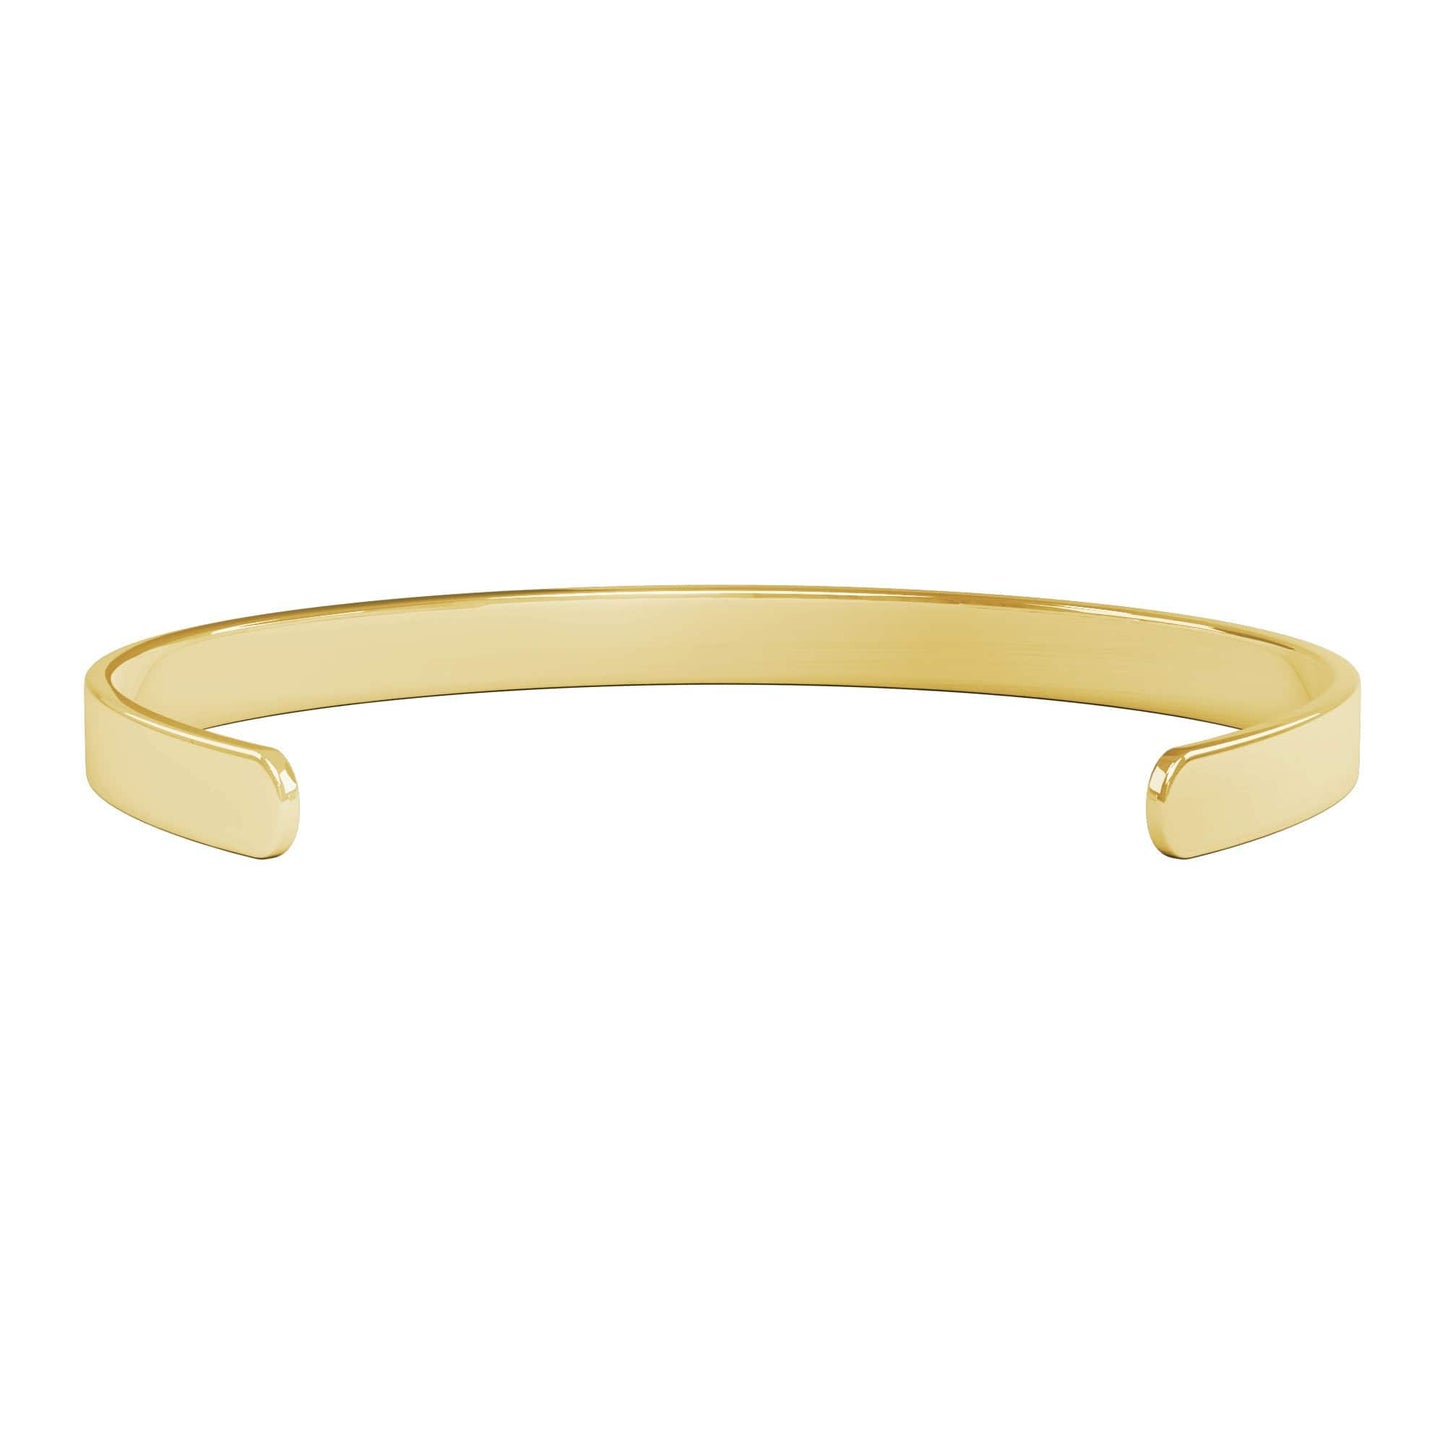 Be Fearless Inspirational Cuff Bracelet, Motivational 18k Gold Cuff Bracelet